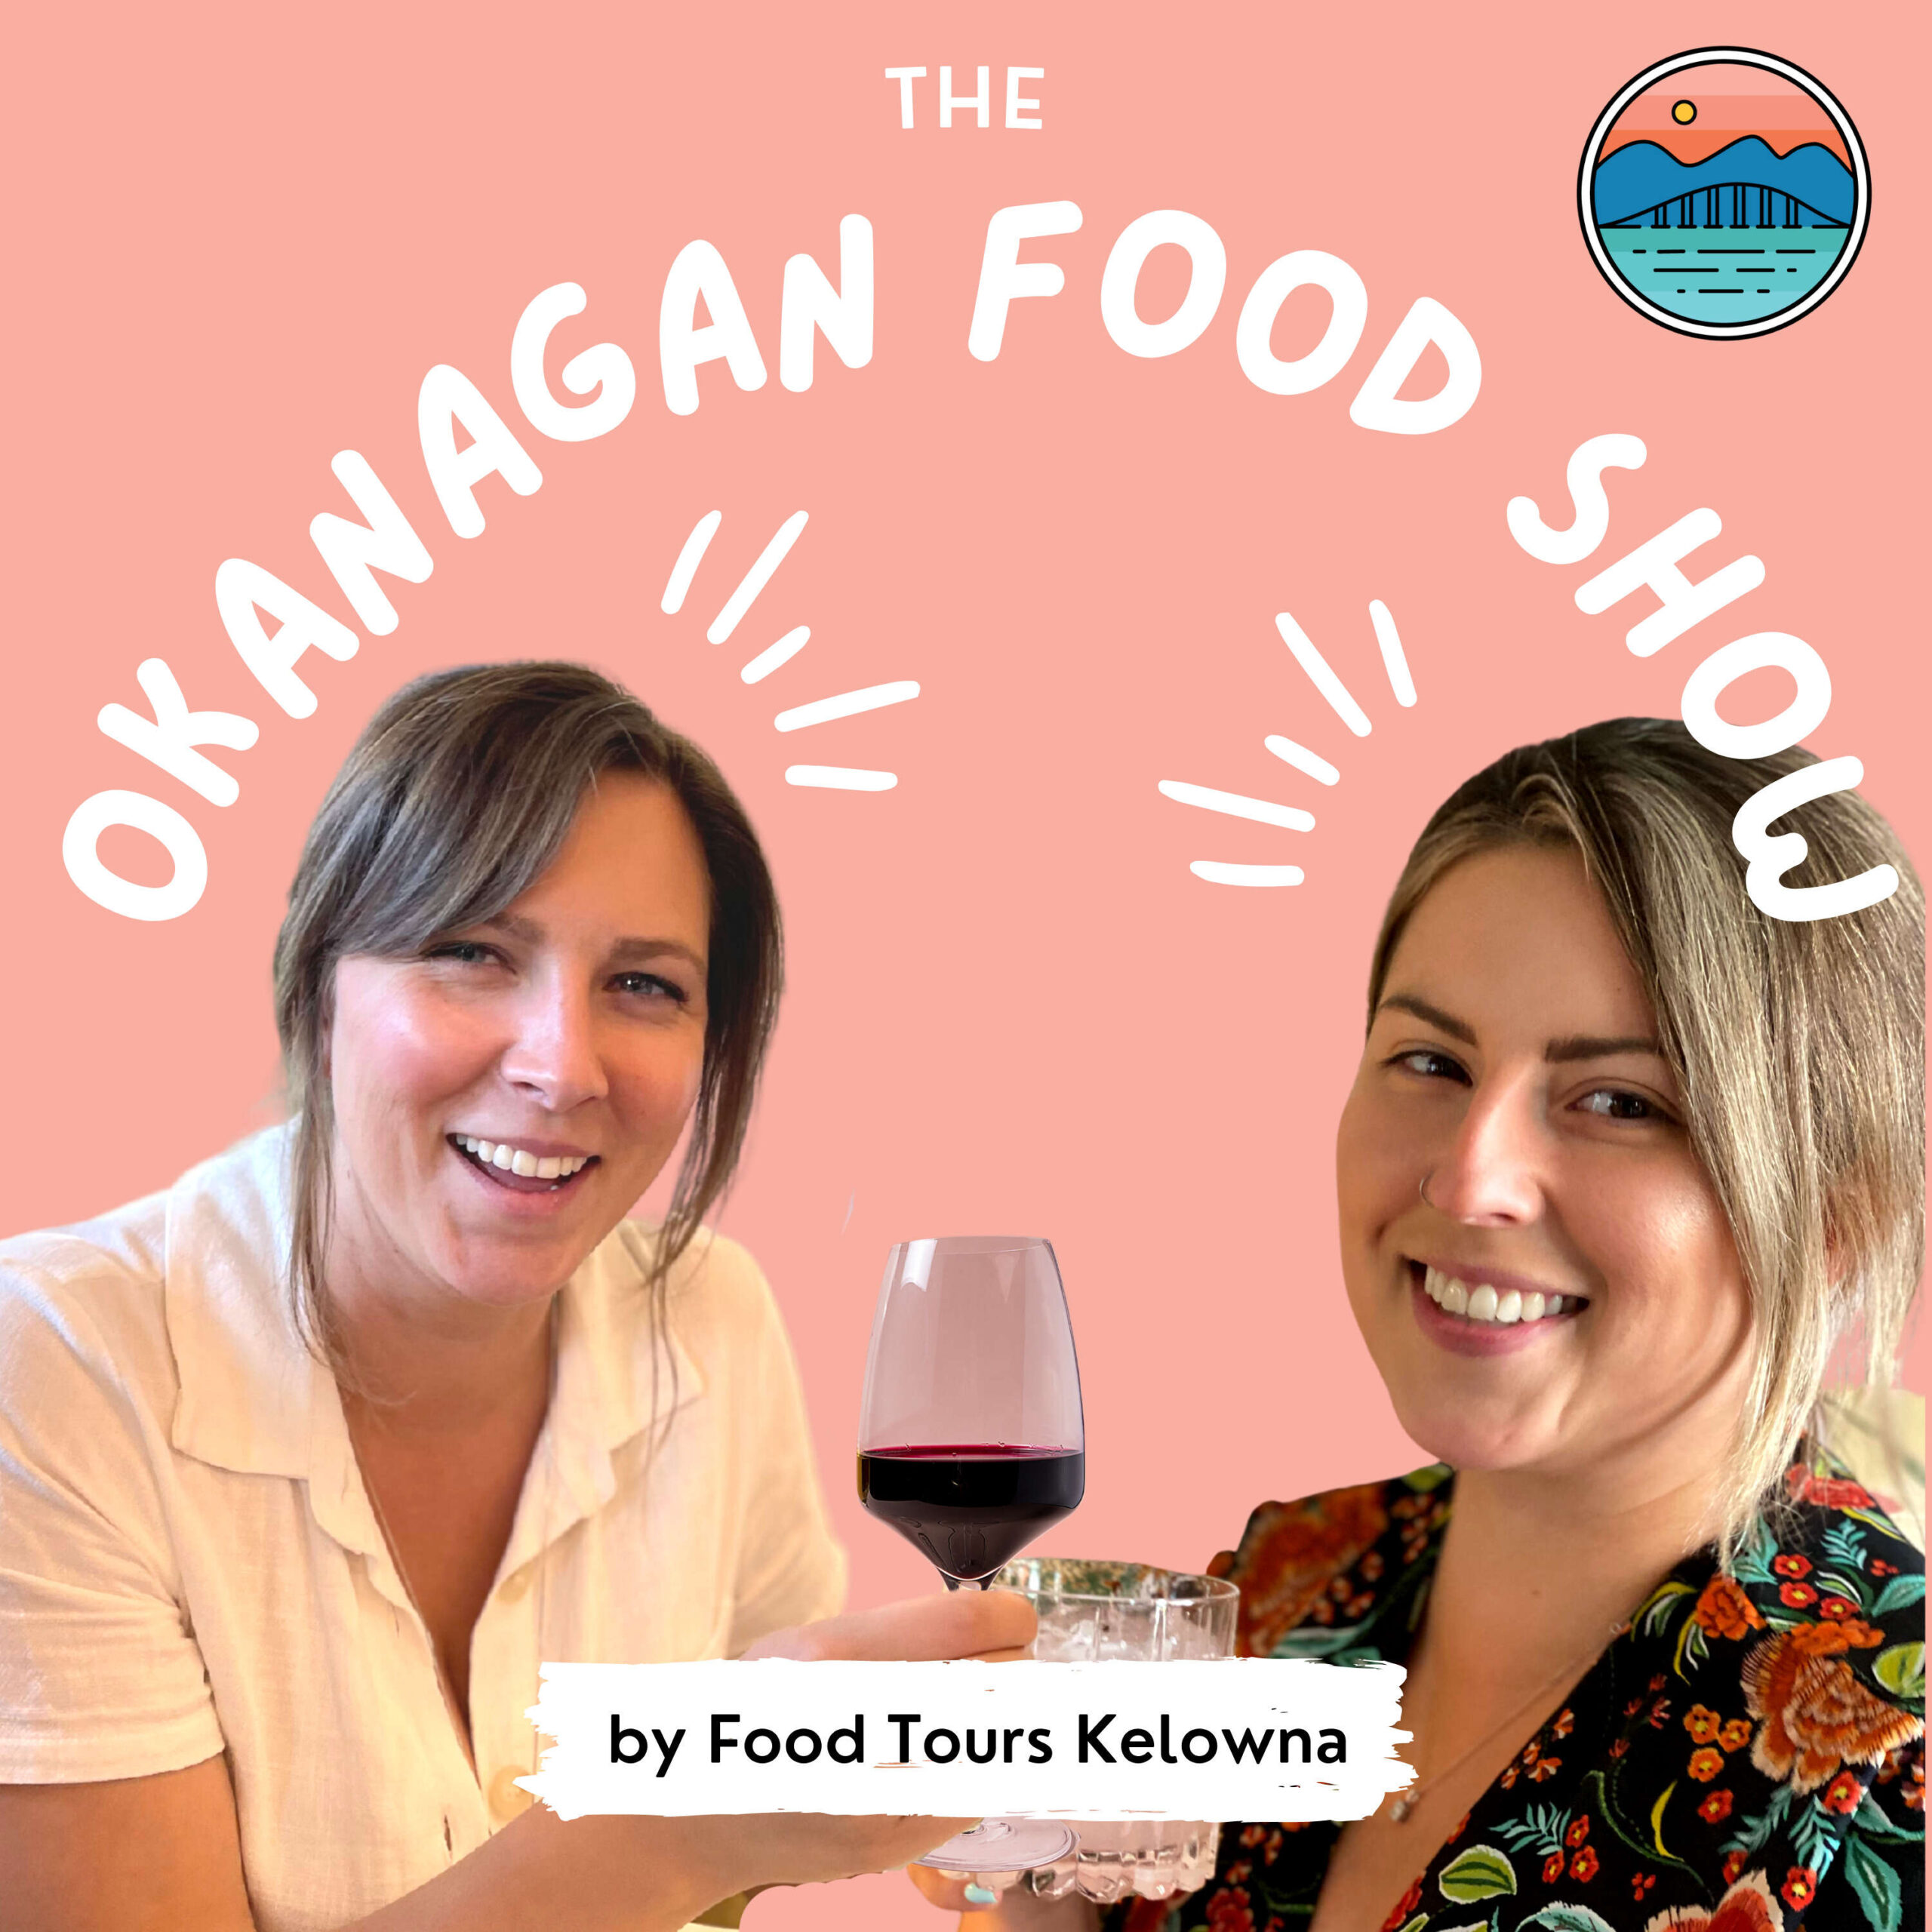 The Okanagan Food Show